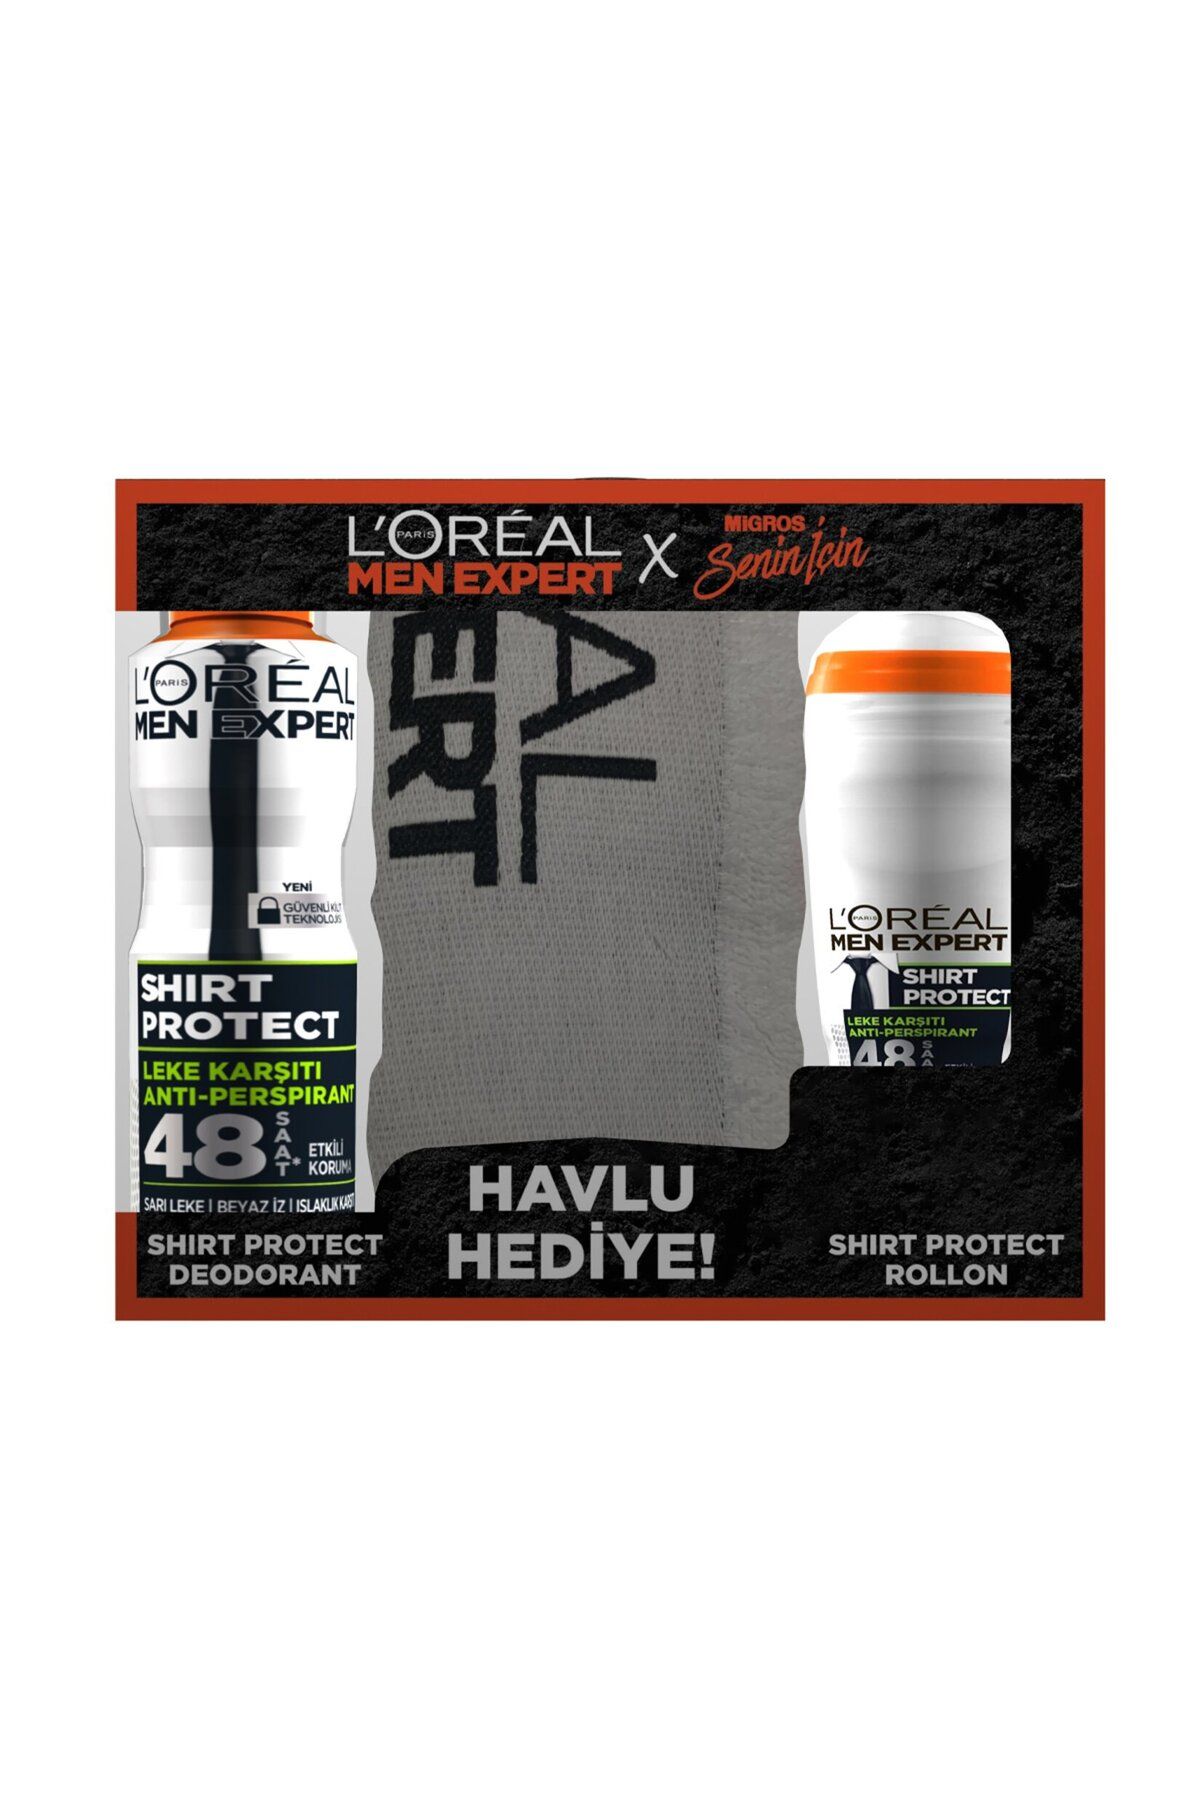 L'Oreal Paris Men Expert Deodorant 150 ml + Roll-on 50Ml + Havlu Hediyeli